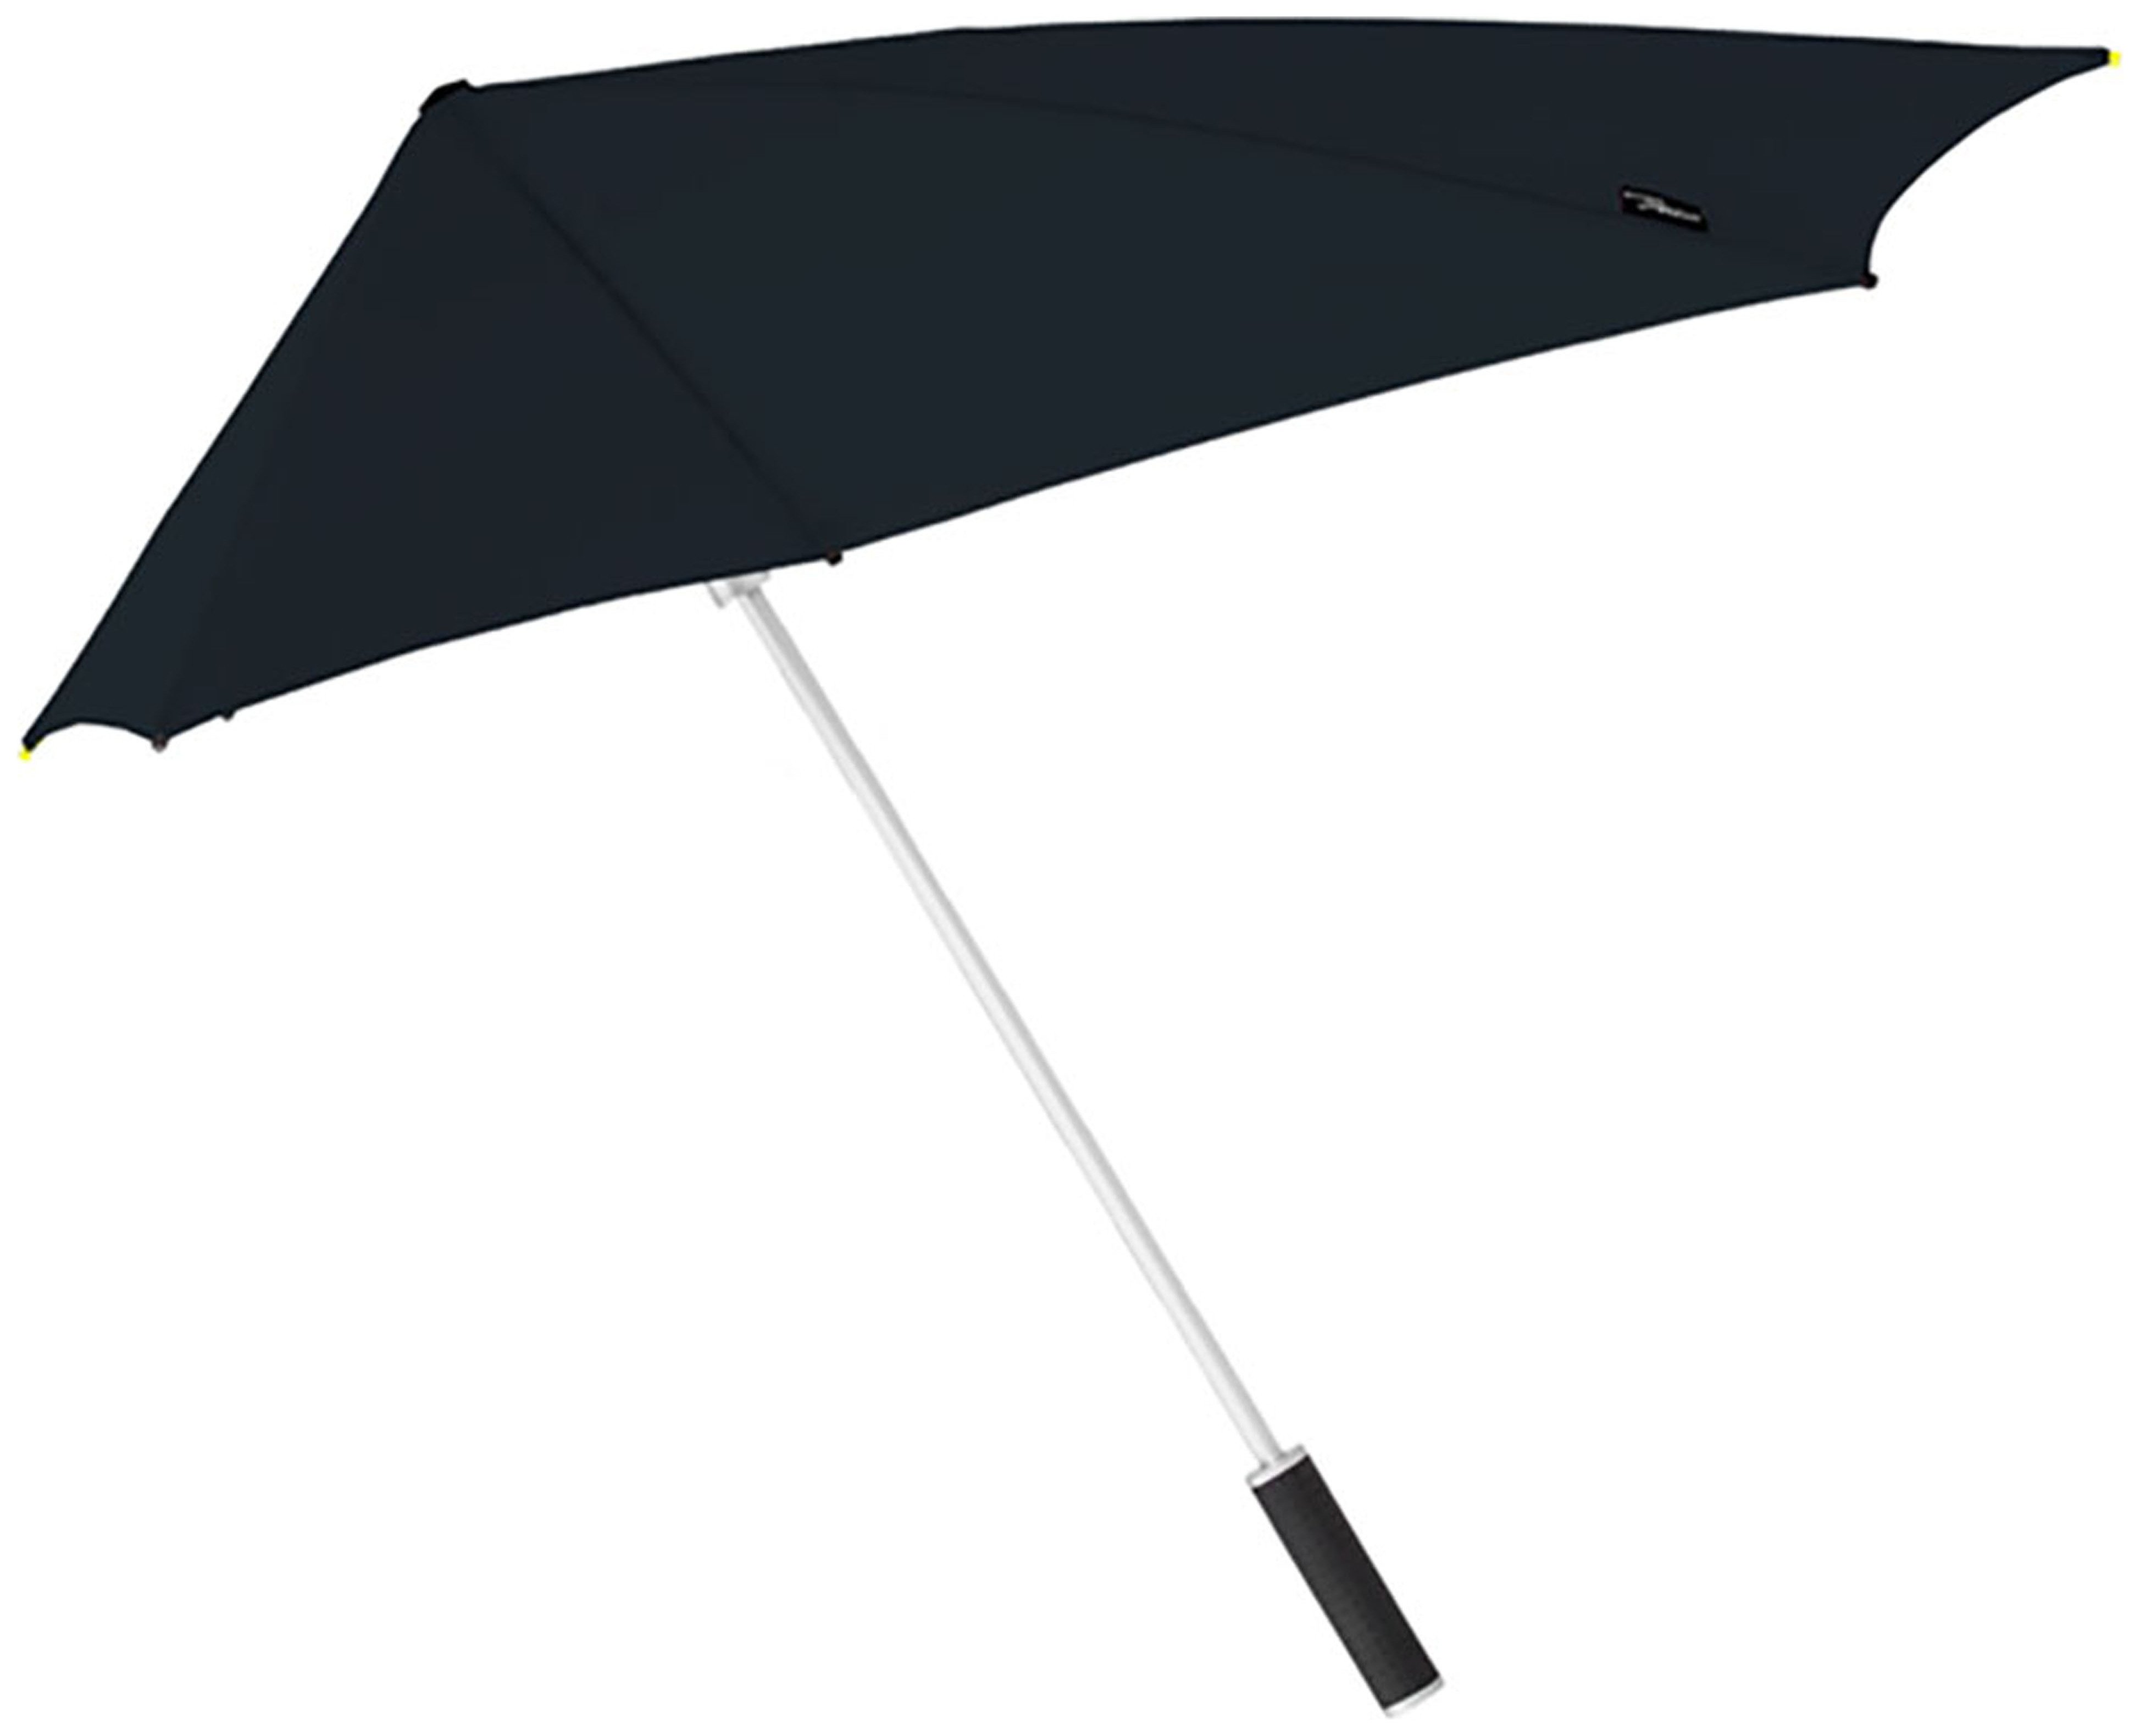 Stealthbomber Umbrella - Black.